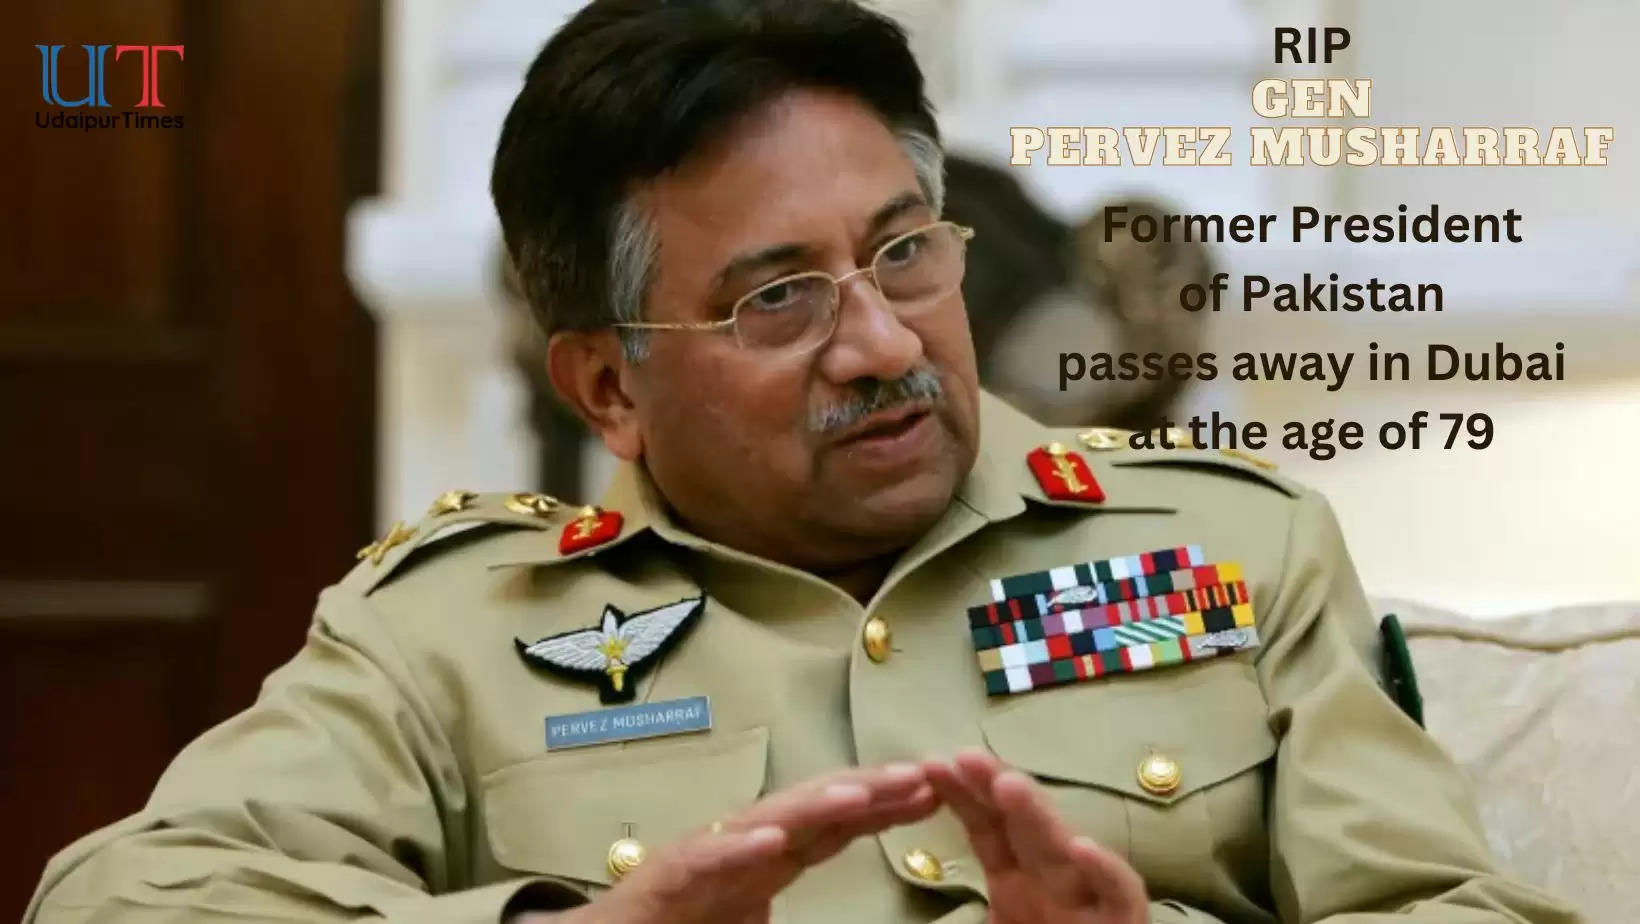 General Pervez Musharraf of Pakistan passes away in Dubai at the age of 79